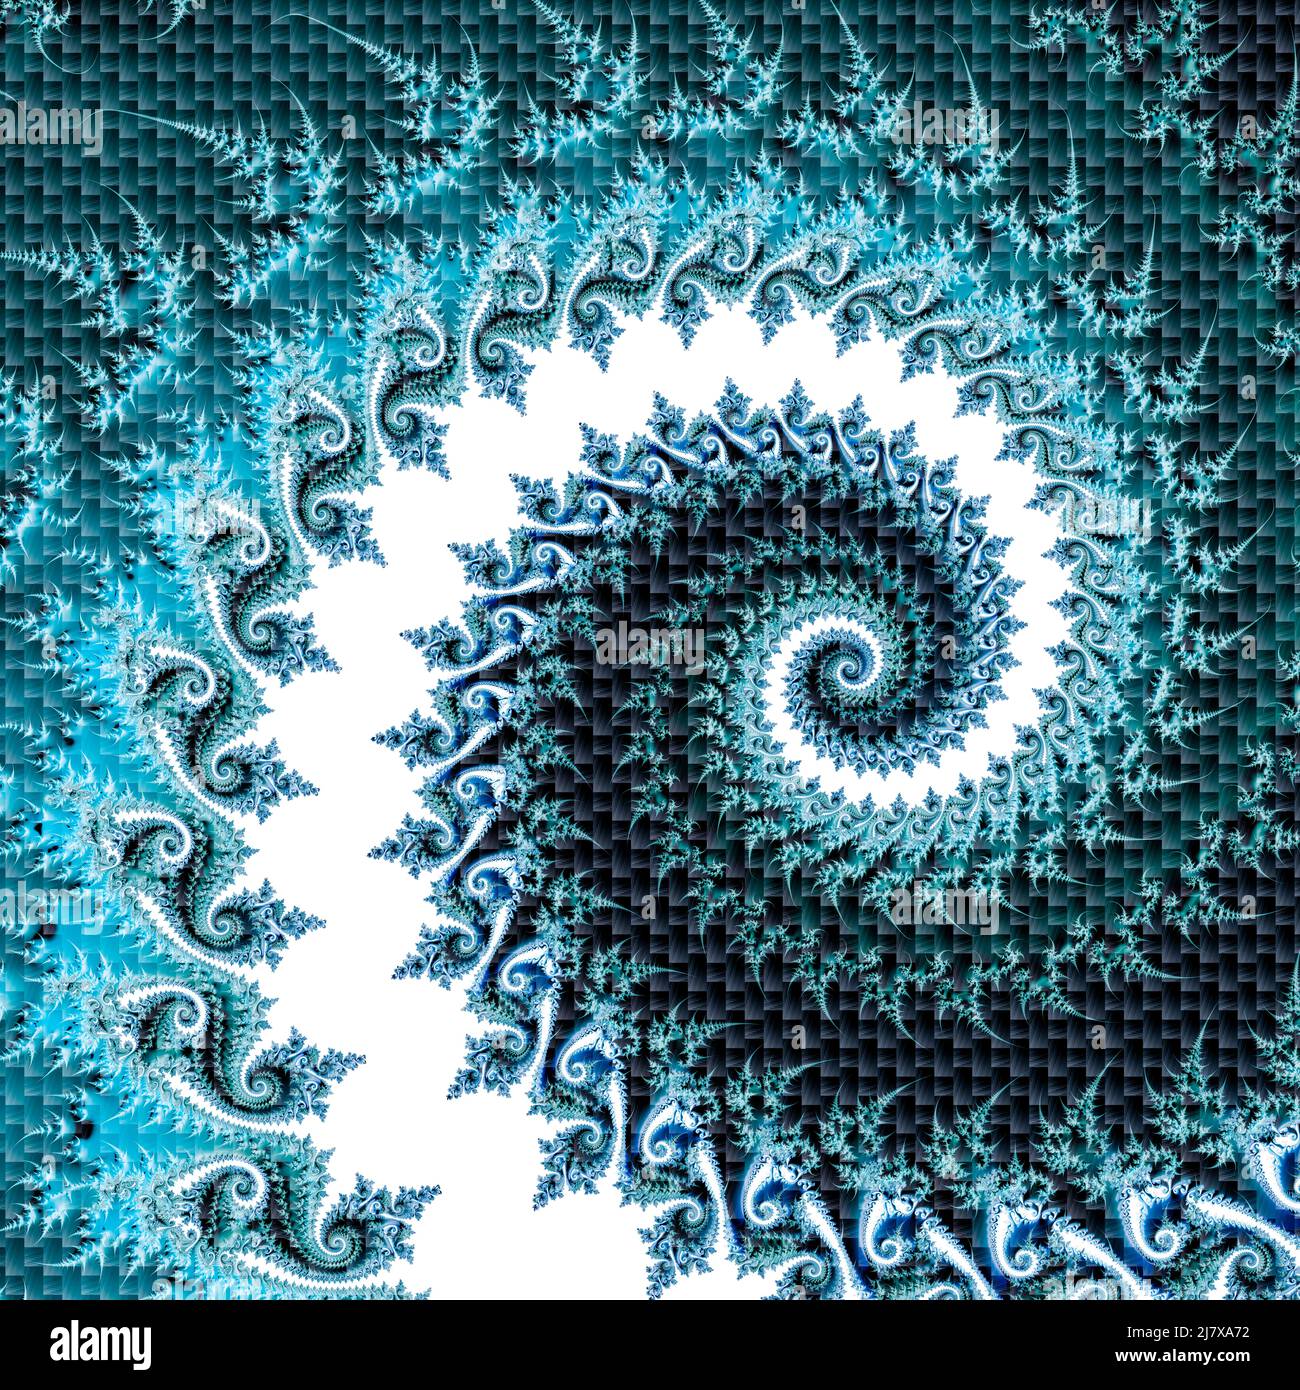 surreal futuristic digital 3d design art abstract background fractal illustration for meditation and decoration wallpaper Stock Photo